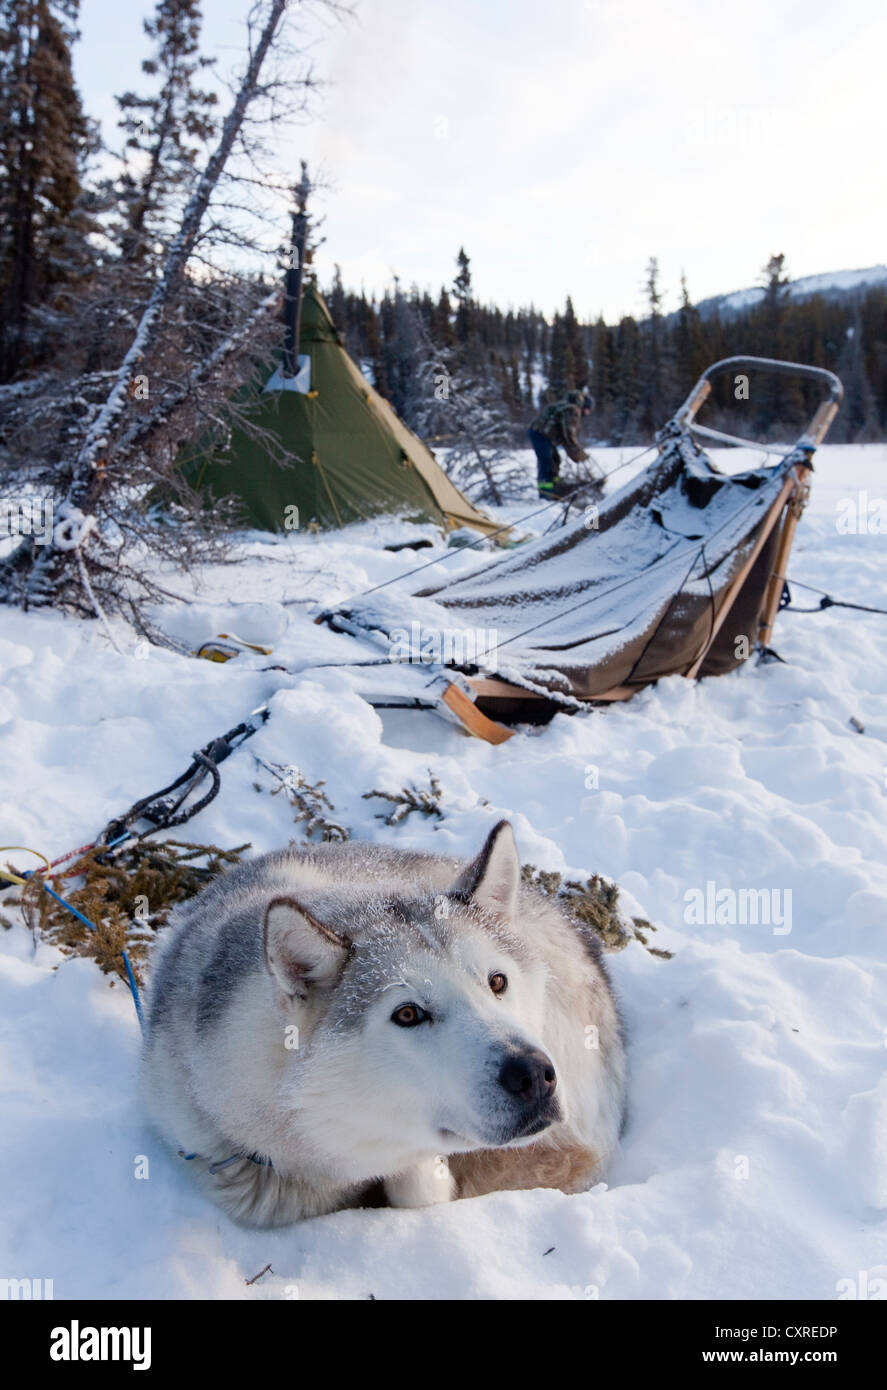 Sled dog, Siberian Husky resting in snow, dog sled, camp, teepee behind, Yukon Territory, Canada Stock Photo